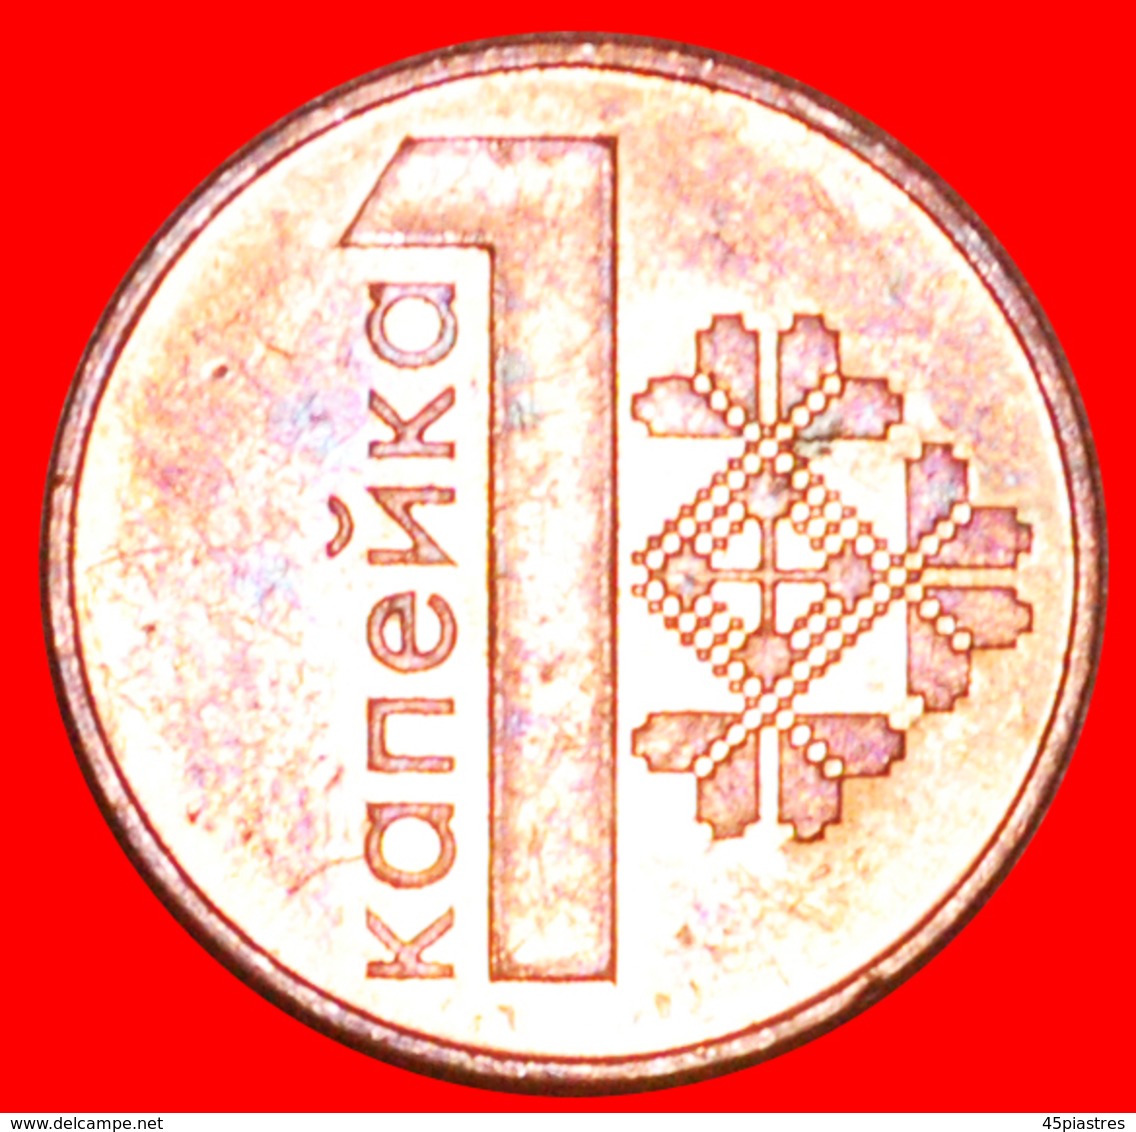 · SLOVAKIA: Belorussia (ex. The USSR, Russia) ★ 1 KOPECK 2009 MINT LUSTER! LOW START ★ NO RESERVE! - Bielorussia